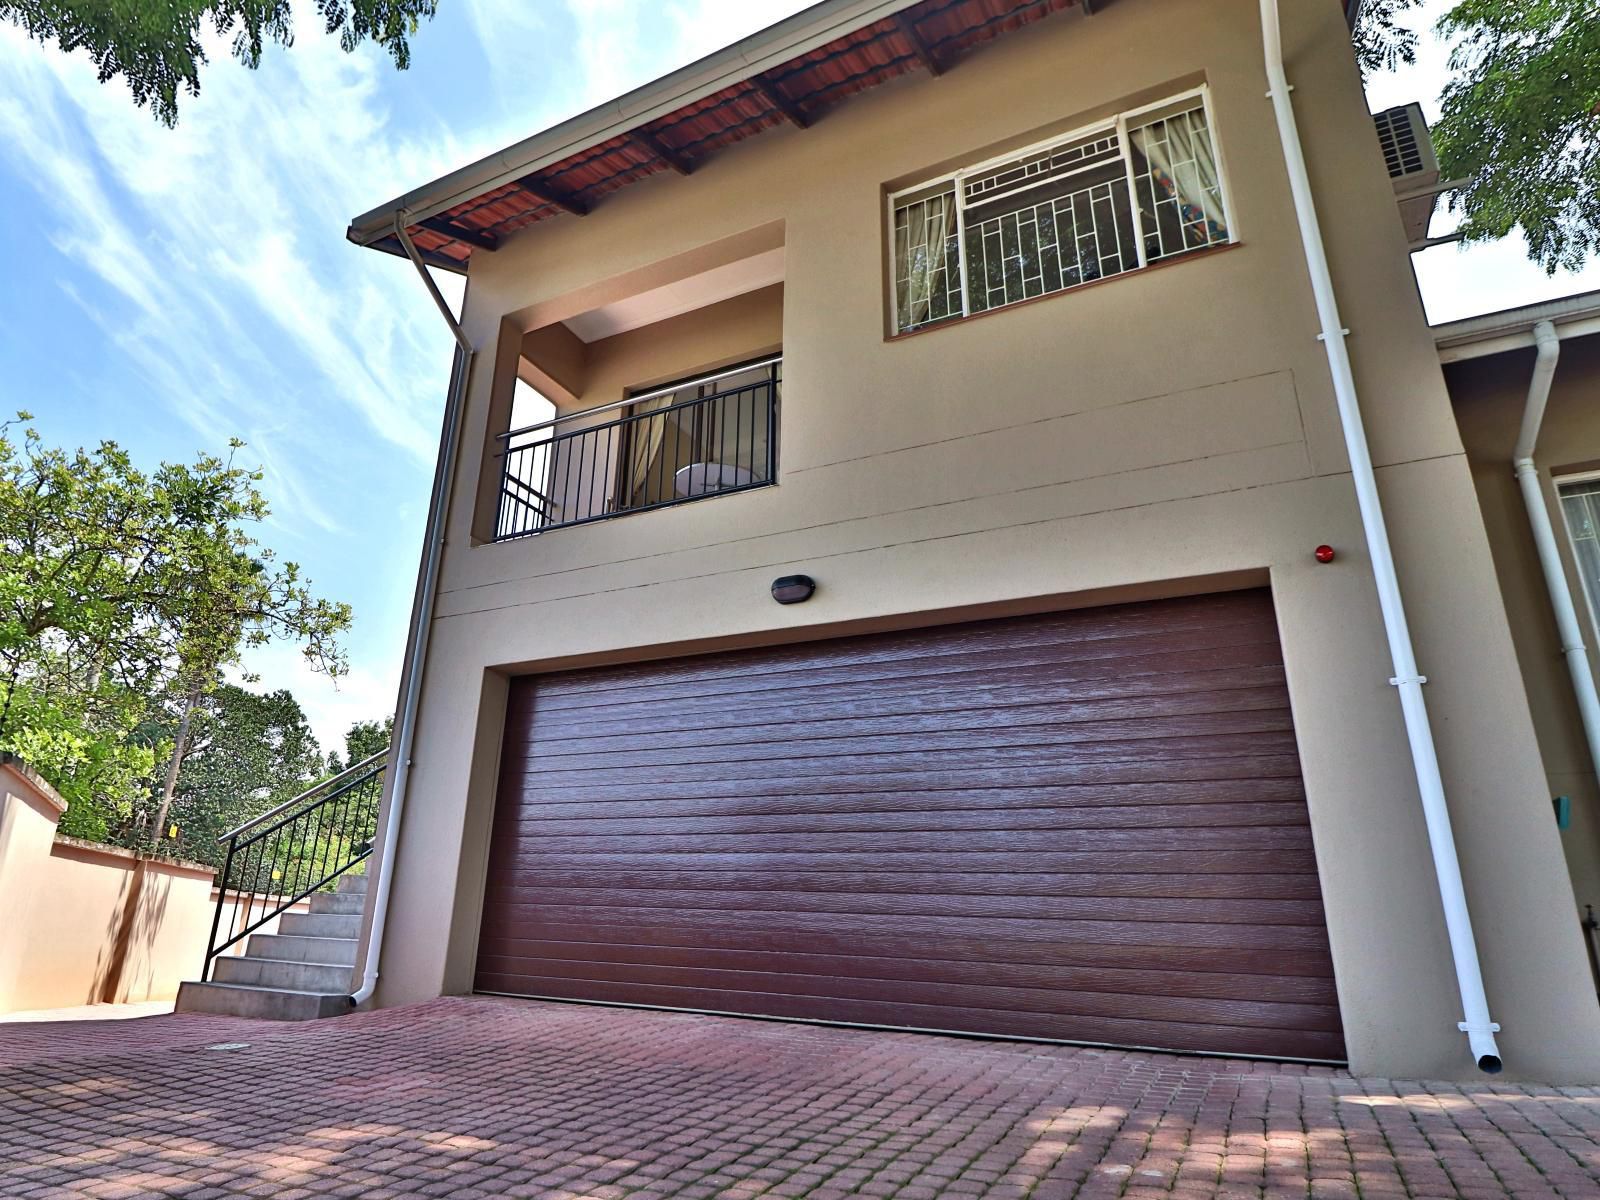 35 Kelkiewyn Bandb Nelspruit Mpumalanga South Africa House, Building, Architecture